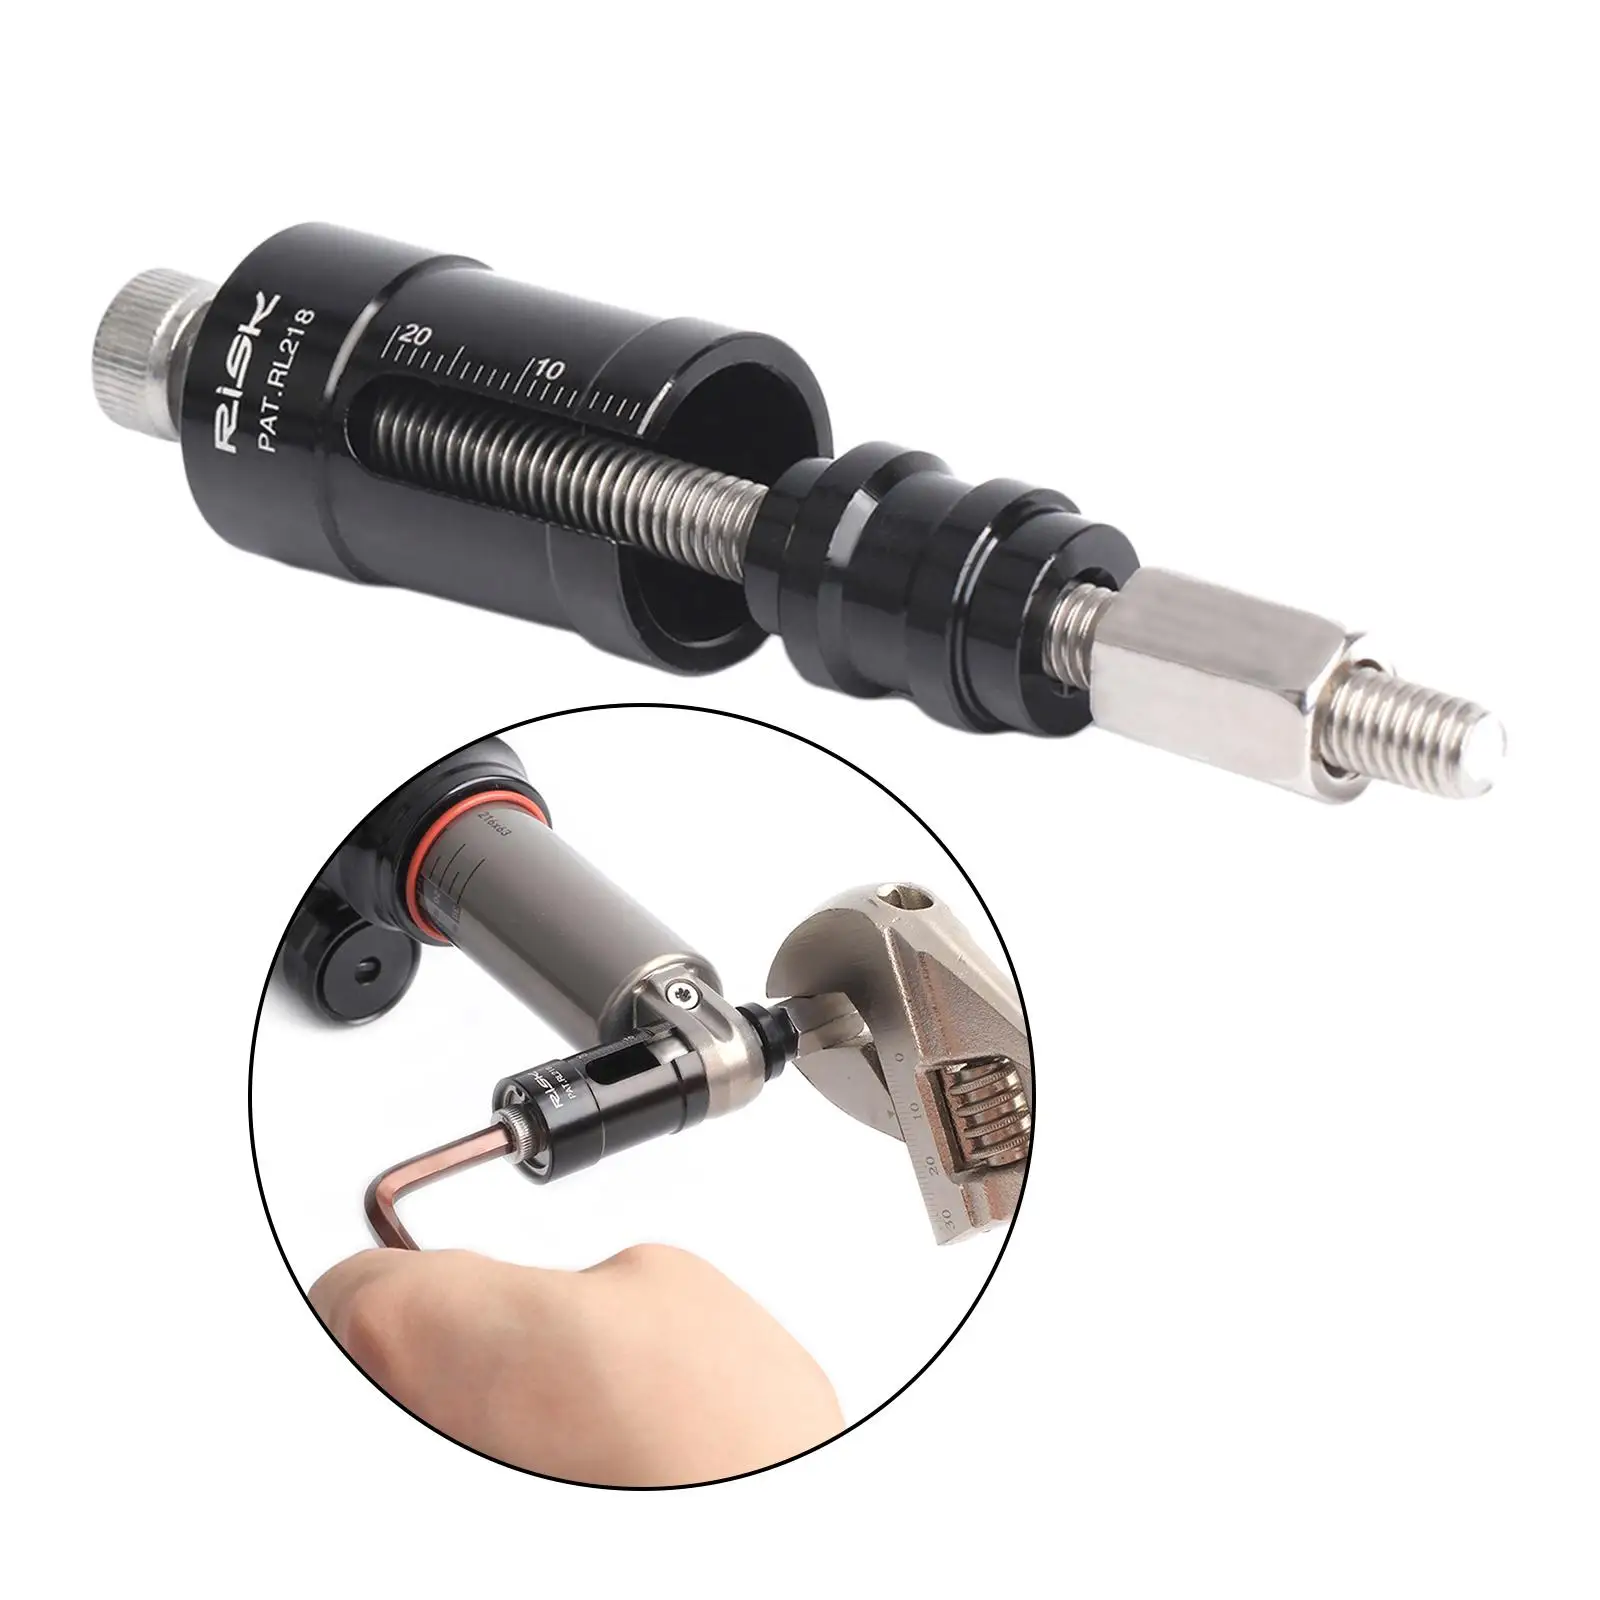 Professional MTB Bike Rear Shock Bushing Tool Rear Shock Absorber Press-in Removal Install Accessories